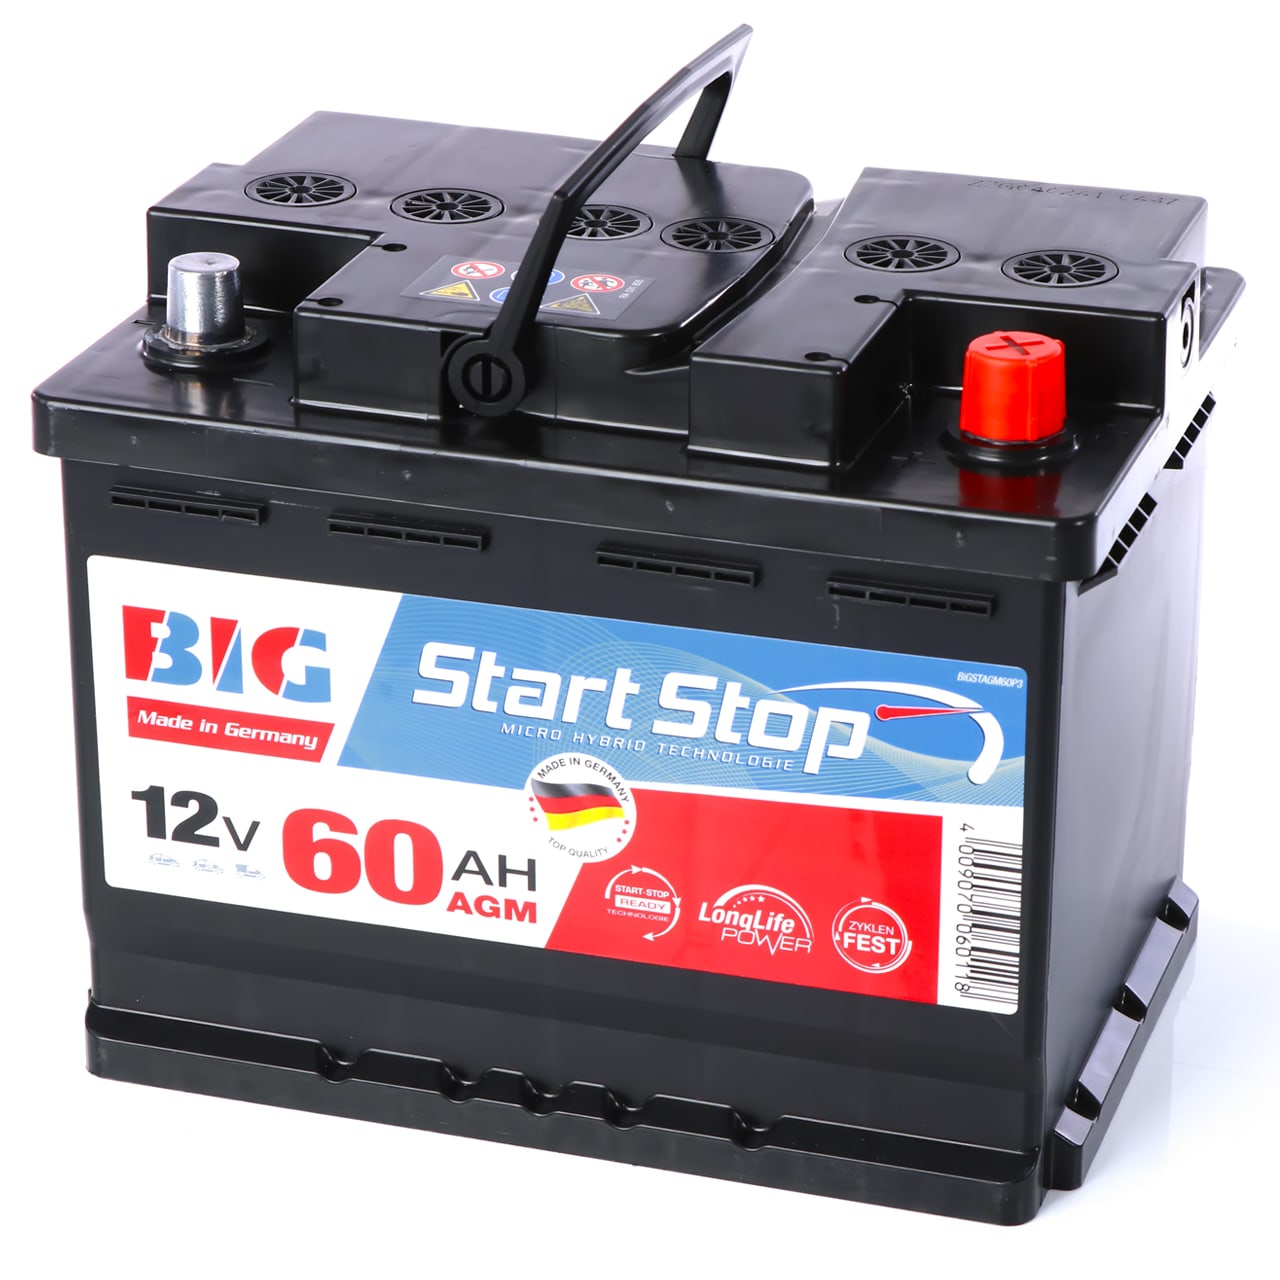 Batterie Start-stop AGM TUDOR TK600 12V 60Ah 680A - Batteries Auto,  Voitures, 4x4, Véhicules Start & Stop Auto - BatterySet